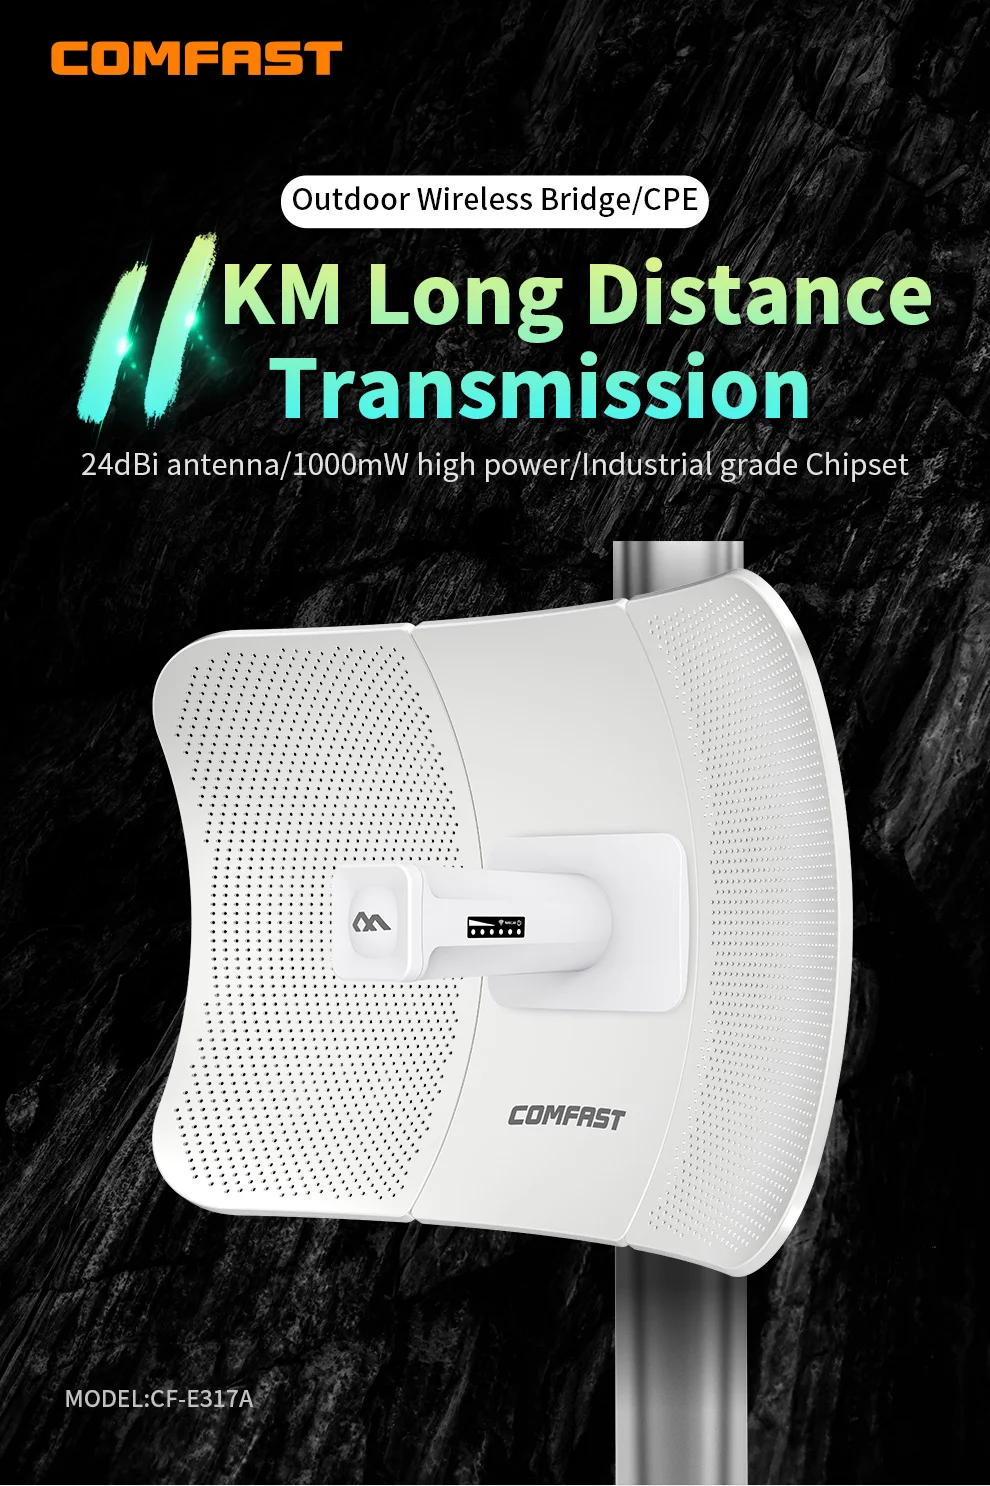 

11KM Comfast 300 Мбит/с, стандартная беспроводная наружная Wi-fi антенна дальнего действия cpe 24 дБи, Wi-fi ретранслятор, маршрутизатор, точка доступа, мо...